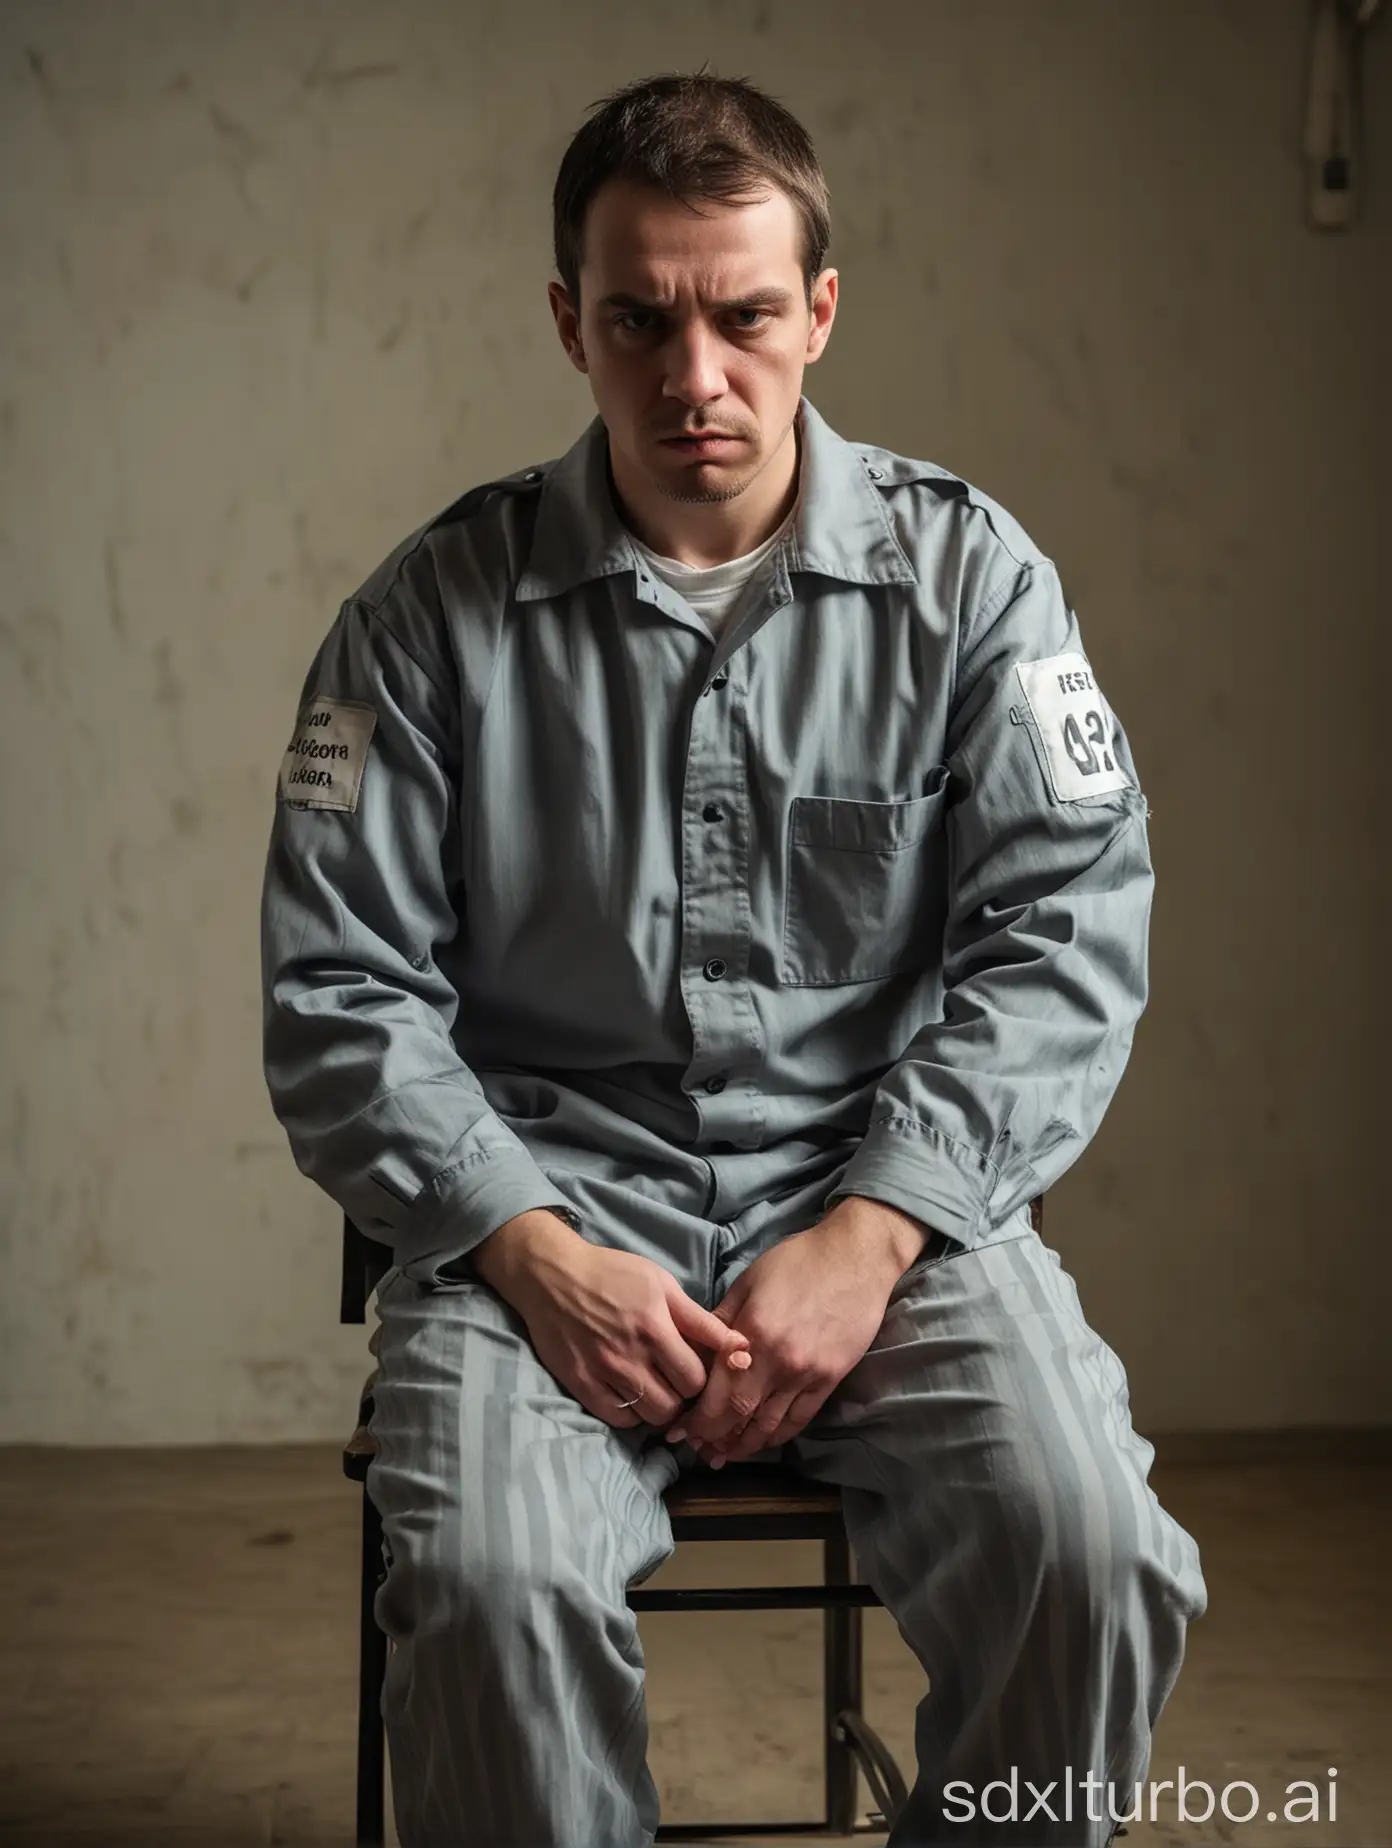 Anxious-Prisoner-Interrogation-Scene-Handcuffed-Man-Sitting-on-Chair